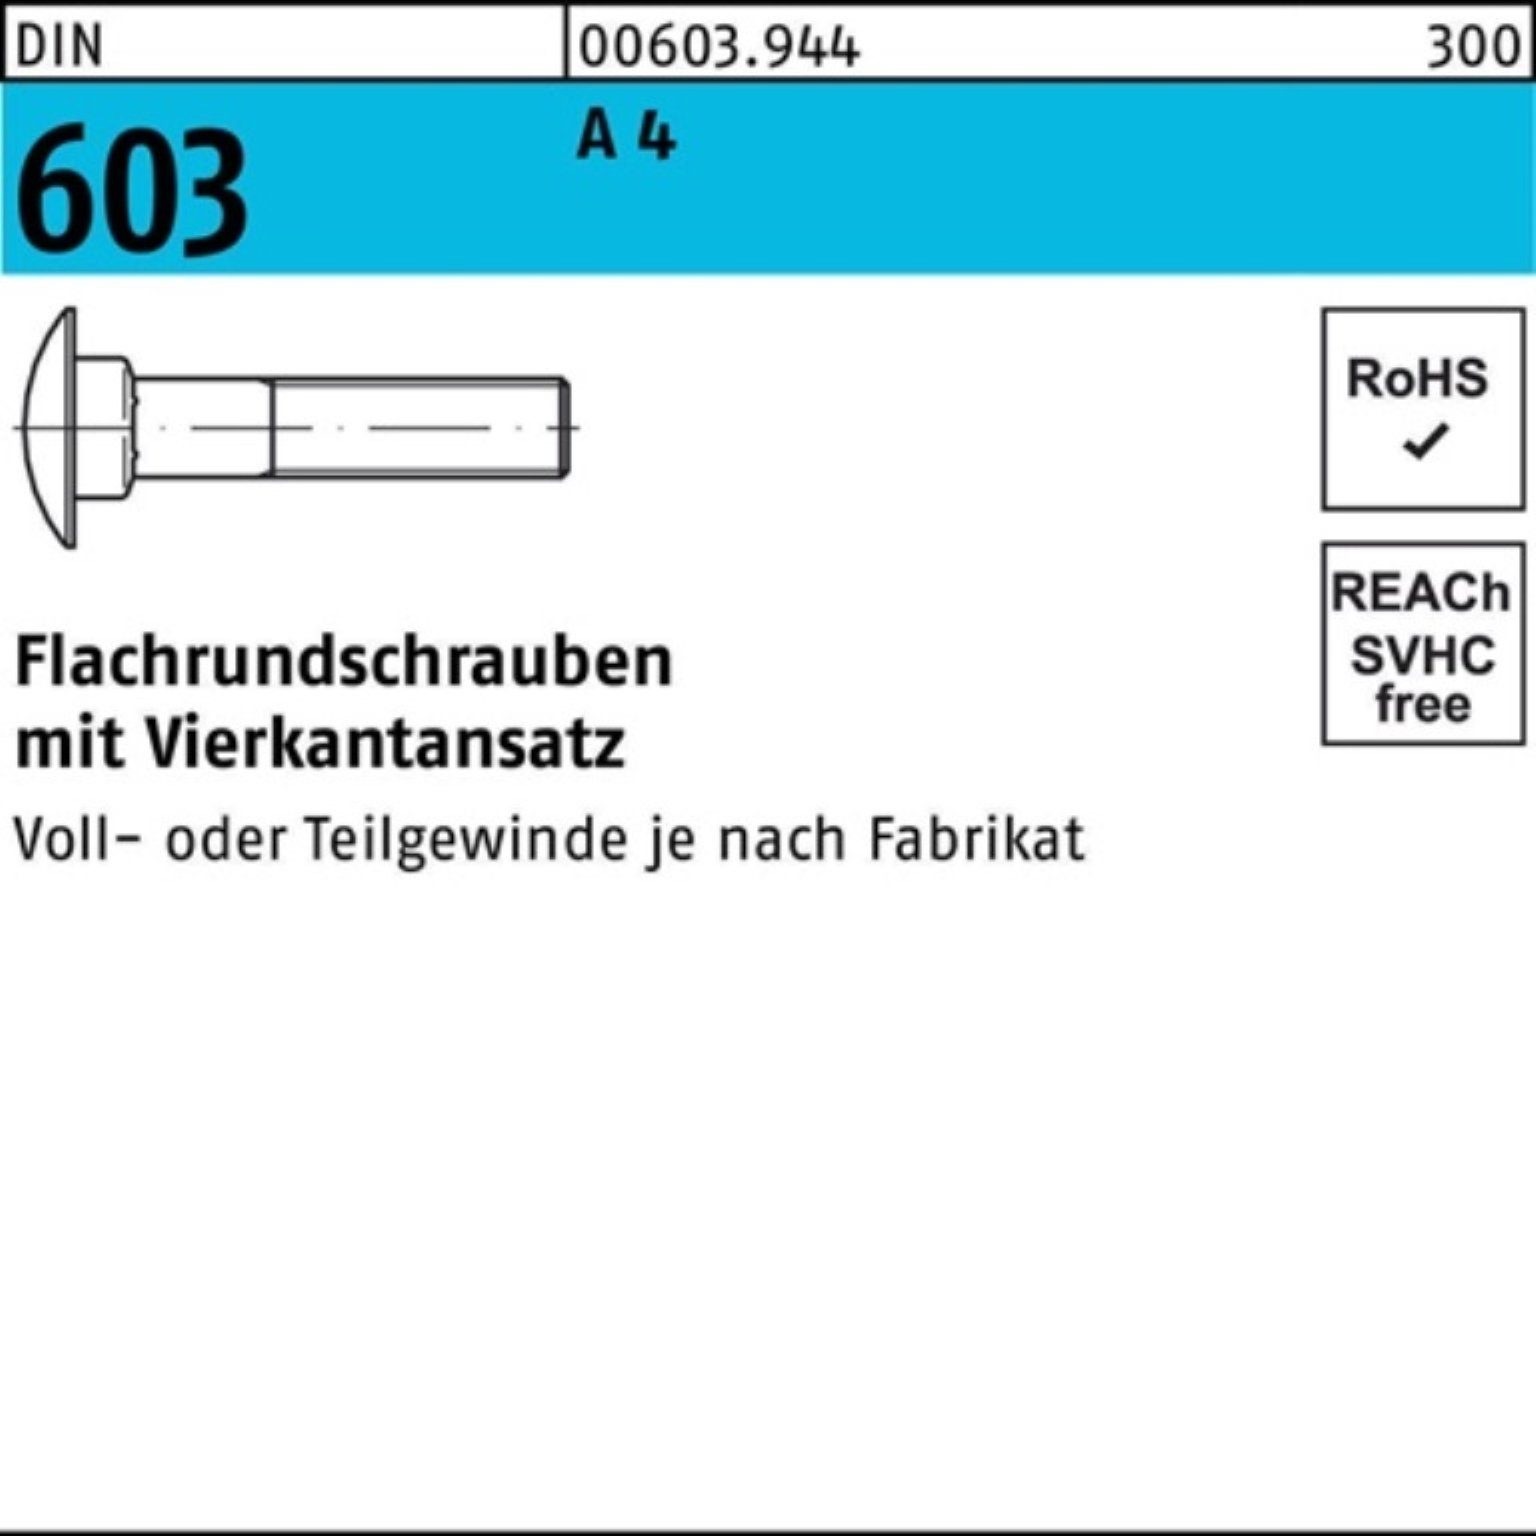 Reyher Schraube 100er Pack Flachrundschraube DIN 603 Vierkantansatz M10x 120 A 4 1 St